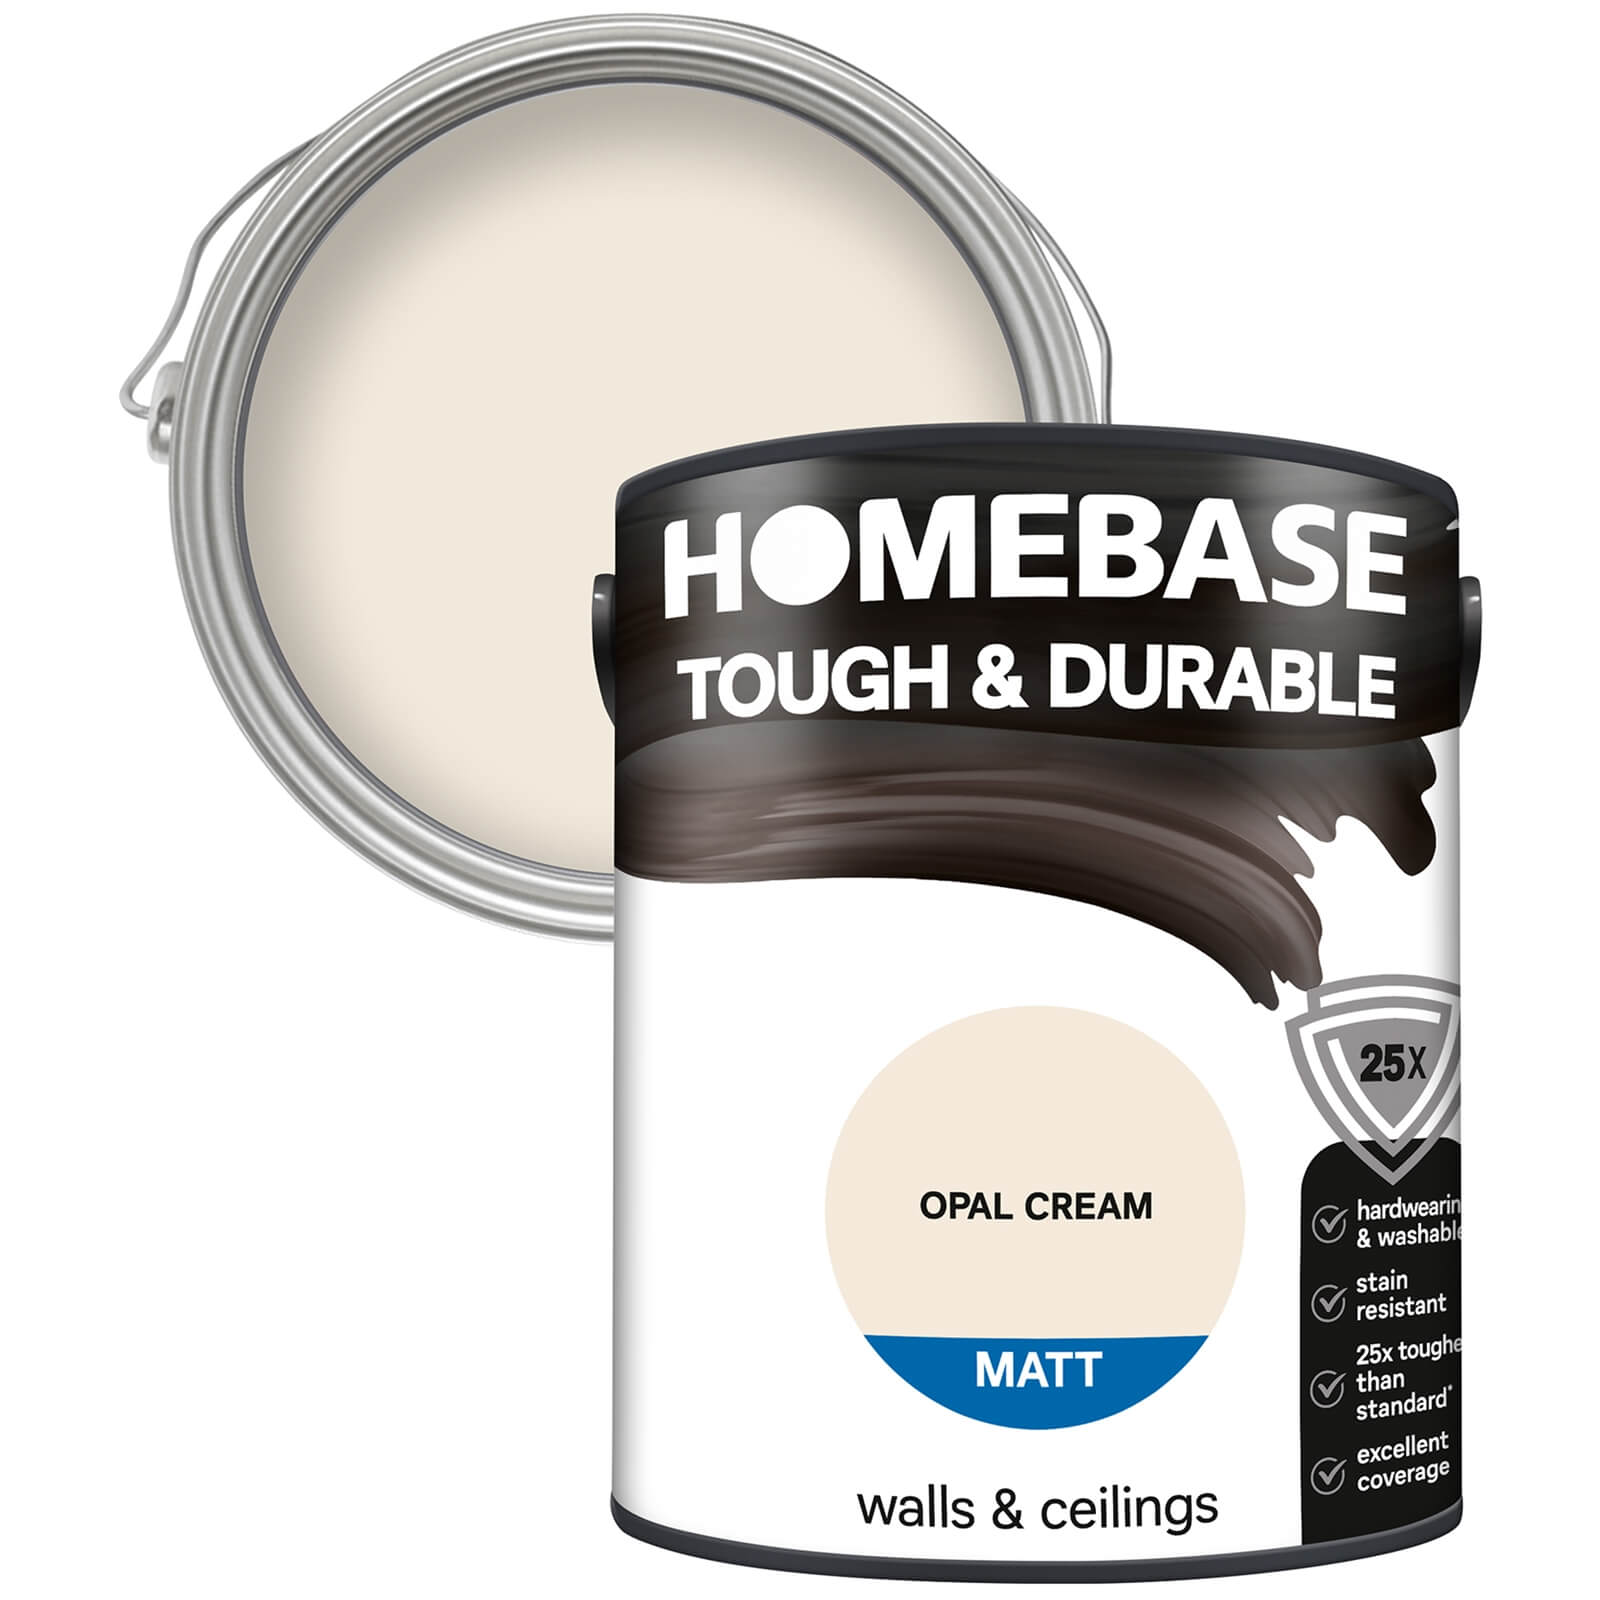 Photo of Homebase Tough & Durable Matt Paint - Opal Cream 5l